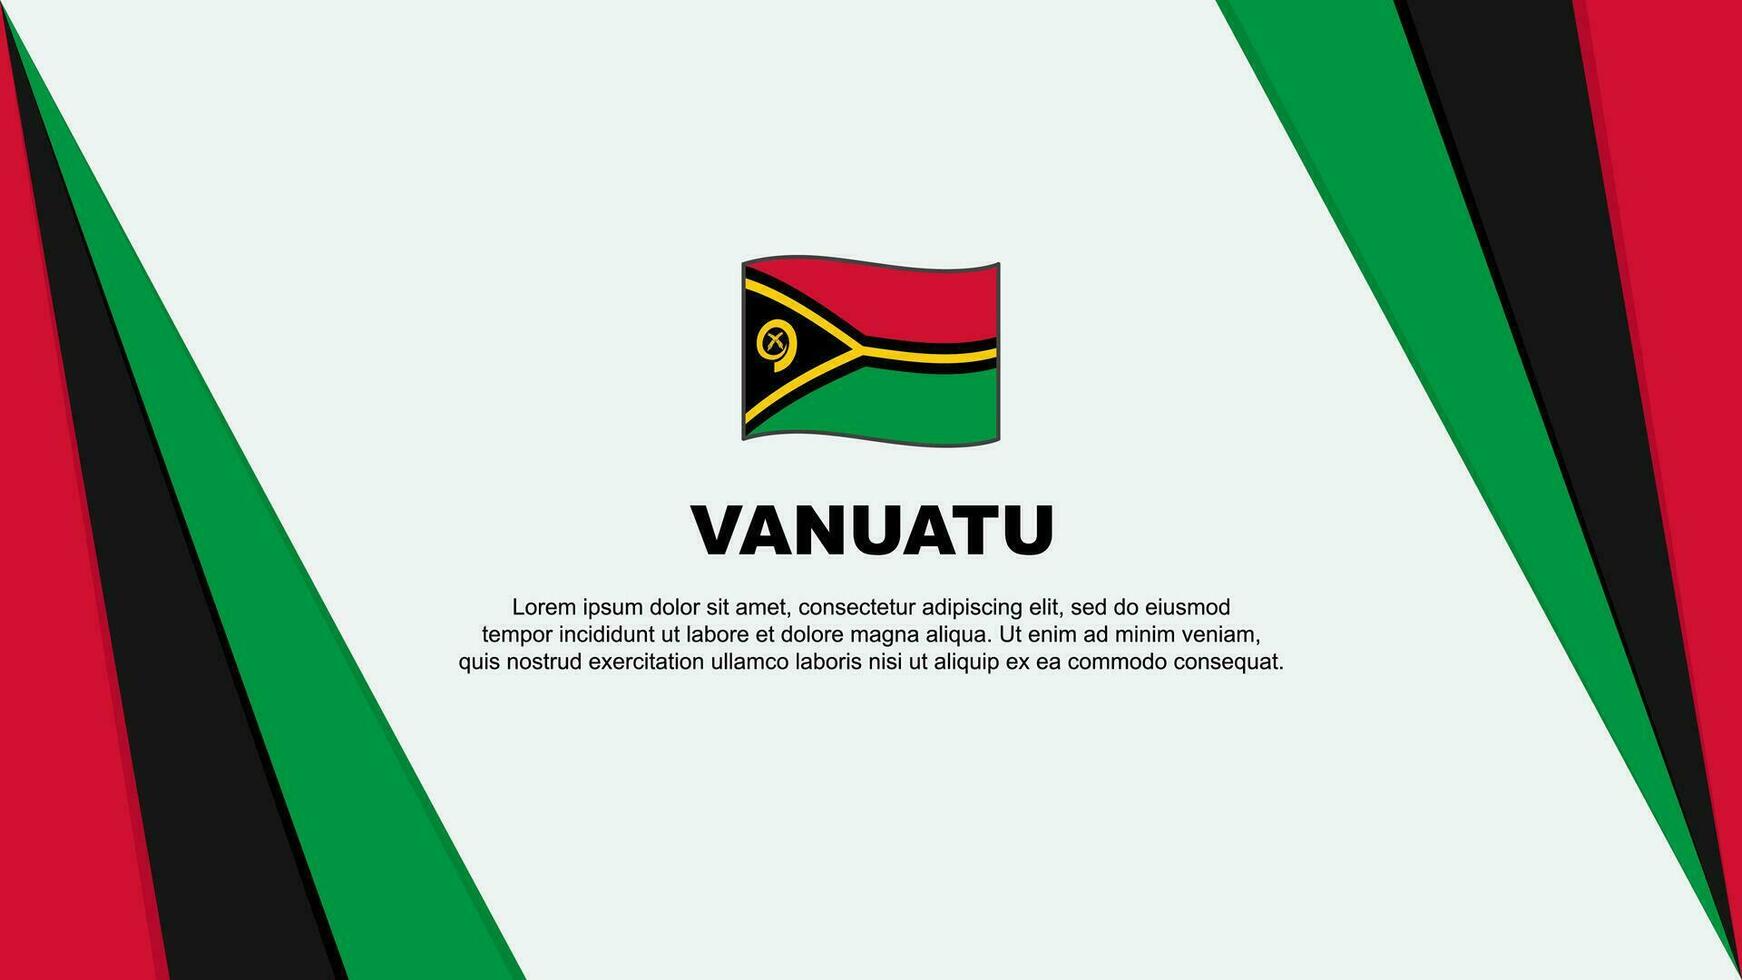 Vanuatu Flag Abstract Background Design Template. Vanuatu Independence Day Banner Cartoon Vector Illustration. Vanuatu Flag